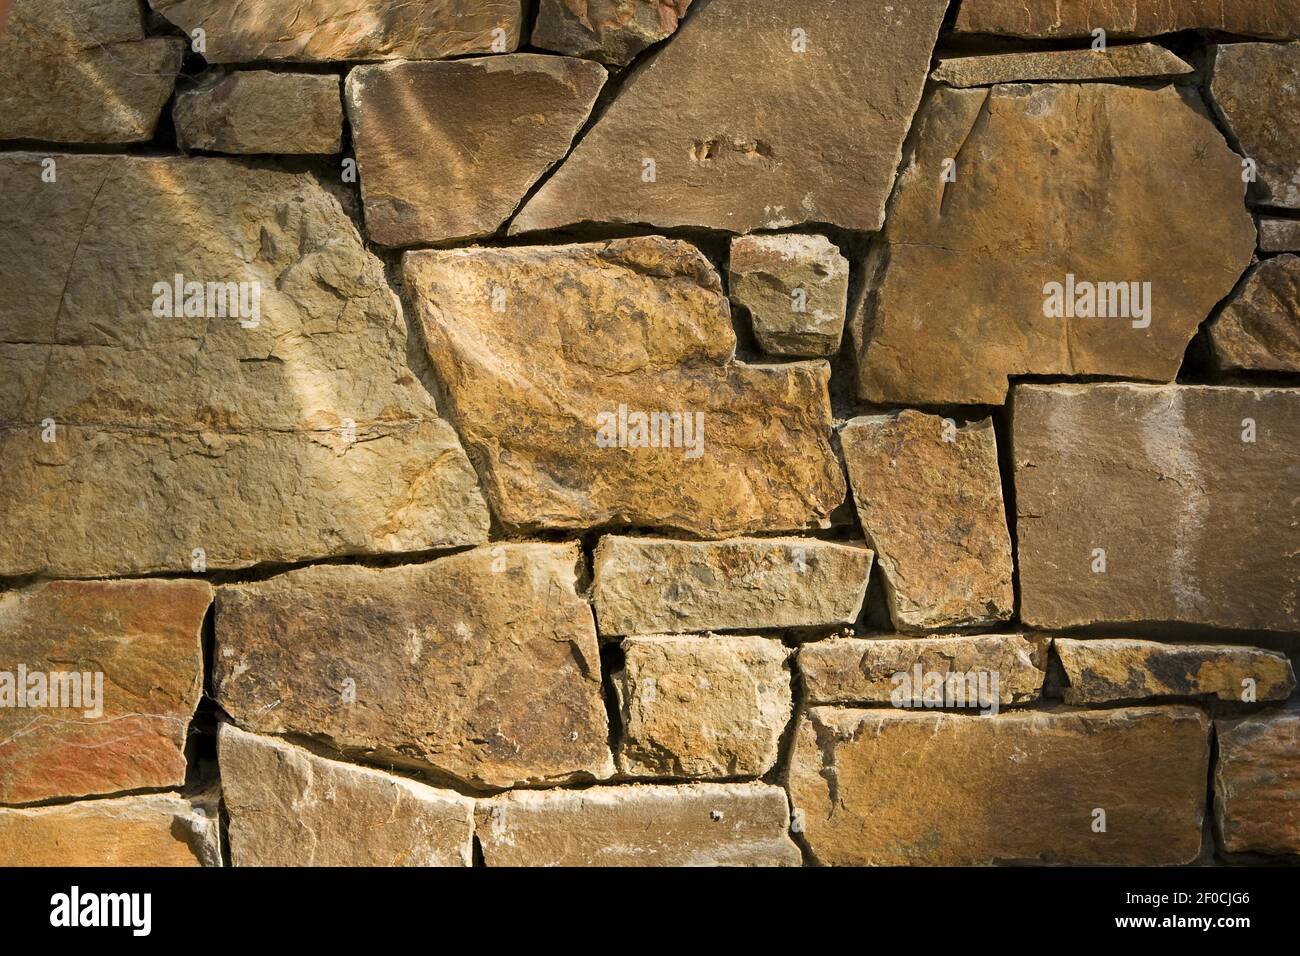 Landscape Rocks Including This Rustic Ranch Brick Rock Veneer Are Available At Cripple Creek Rock Company In Kansas City Missouri Photo By Tammy Ljungblad Kansas City Star Mct Sipa Usa Stock Photo Alamy